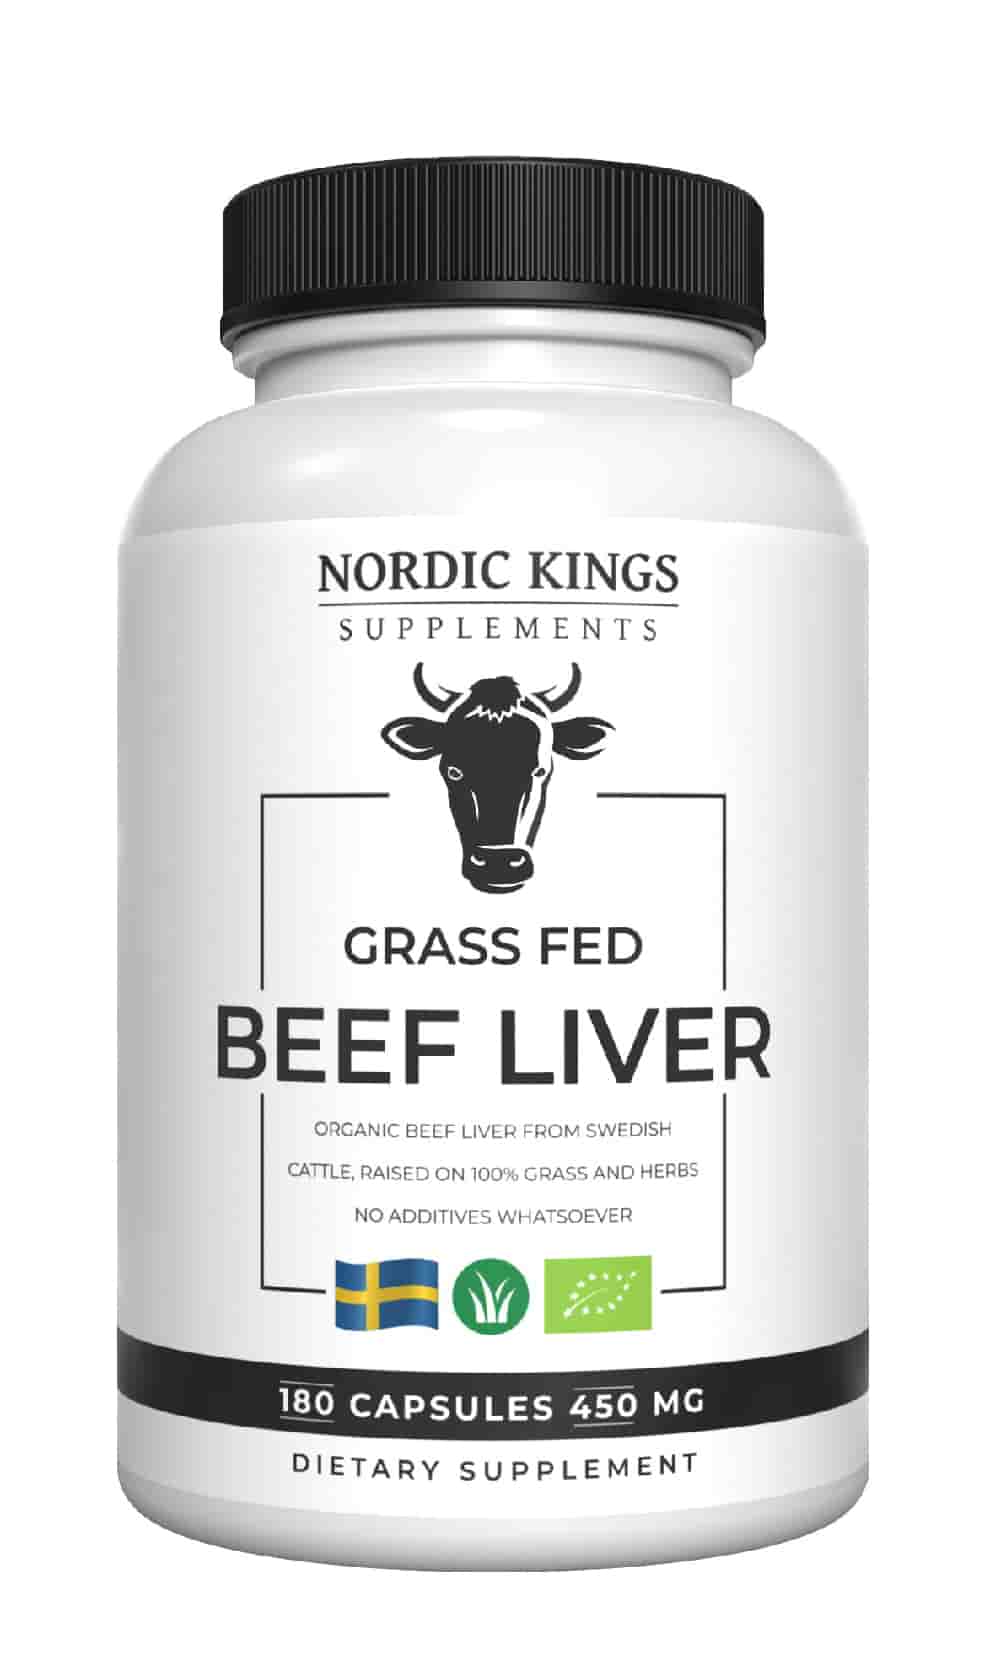 Nordic Kings Organic Grass Fed Beef Liver bei LiveHelfi kaufen